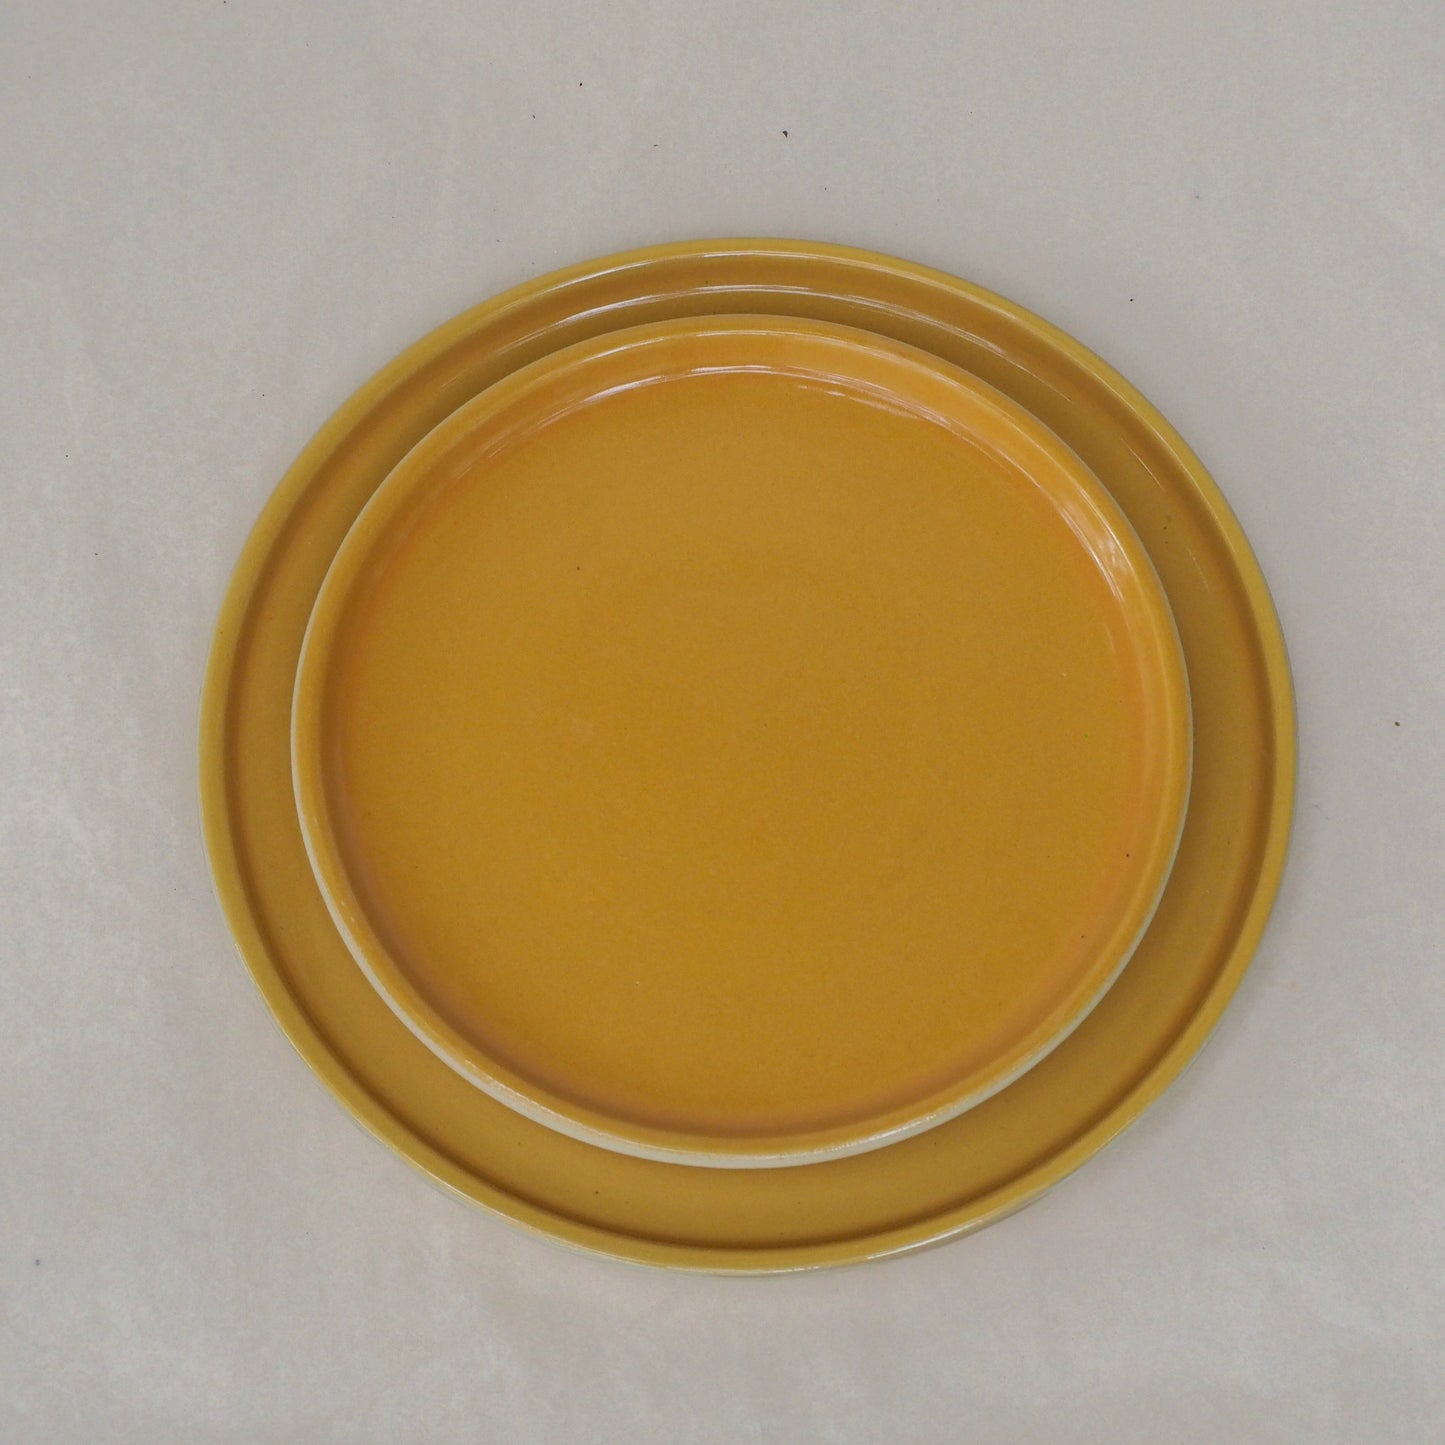 Amber Love Ceramic Side Plate